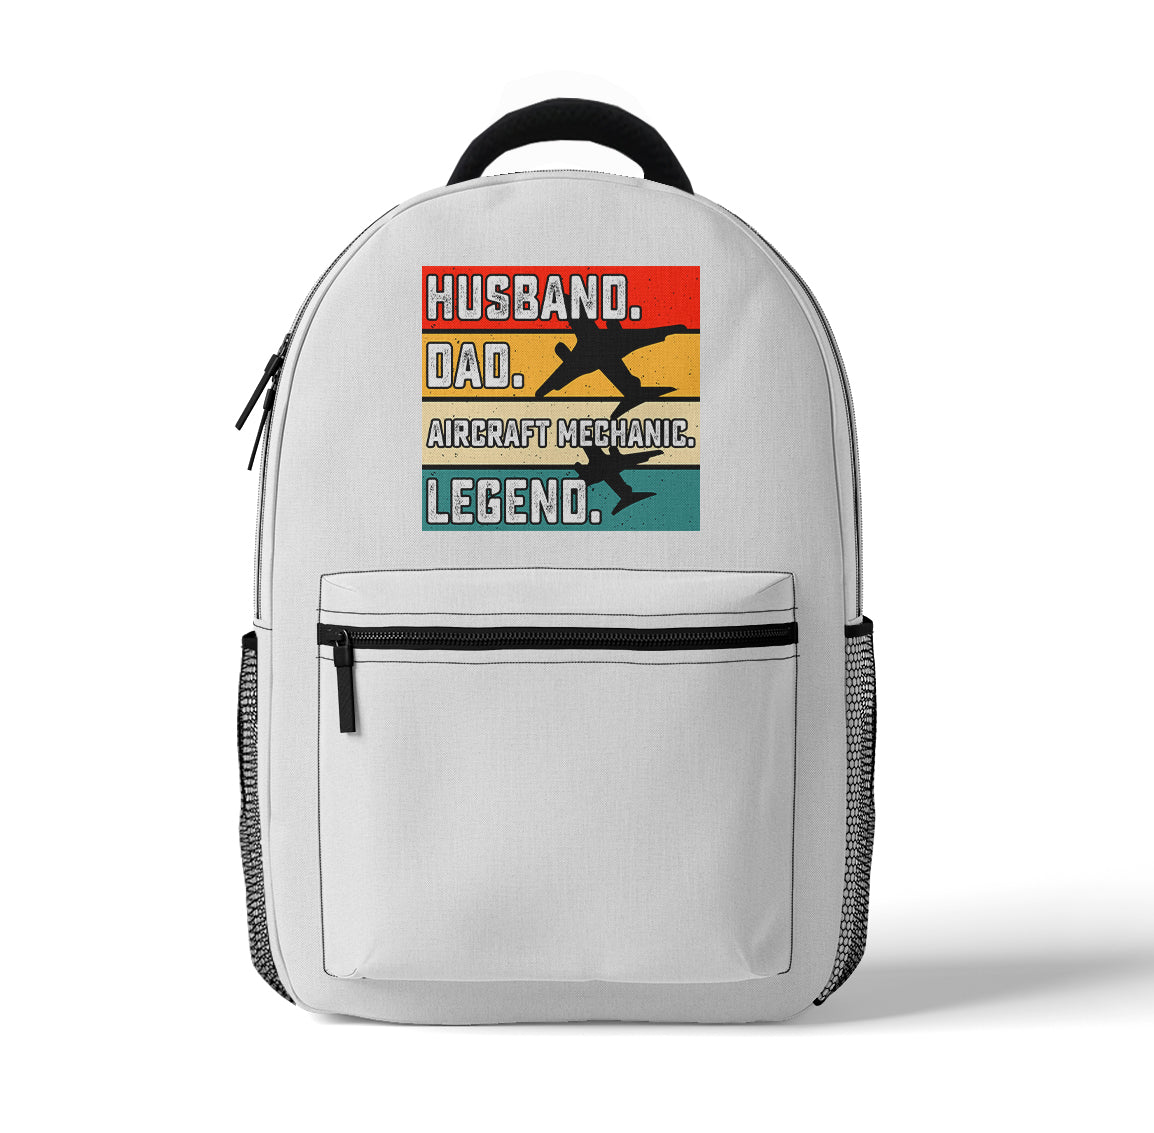 Husband & Dad & Aircraft Mechanic & Legend Designed 3D Backpacks